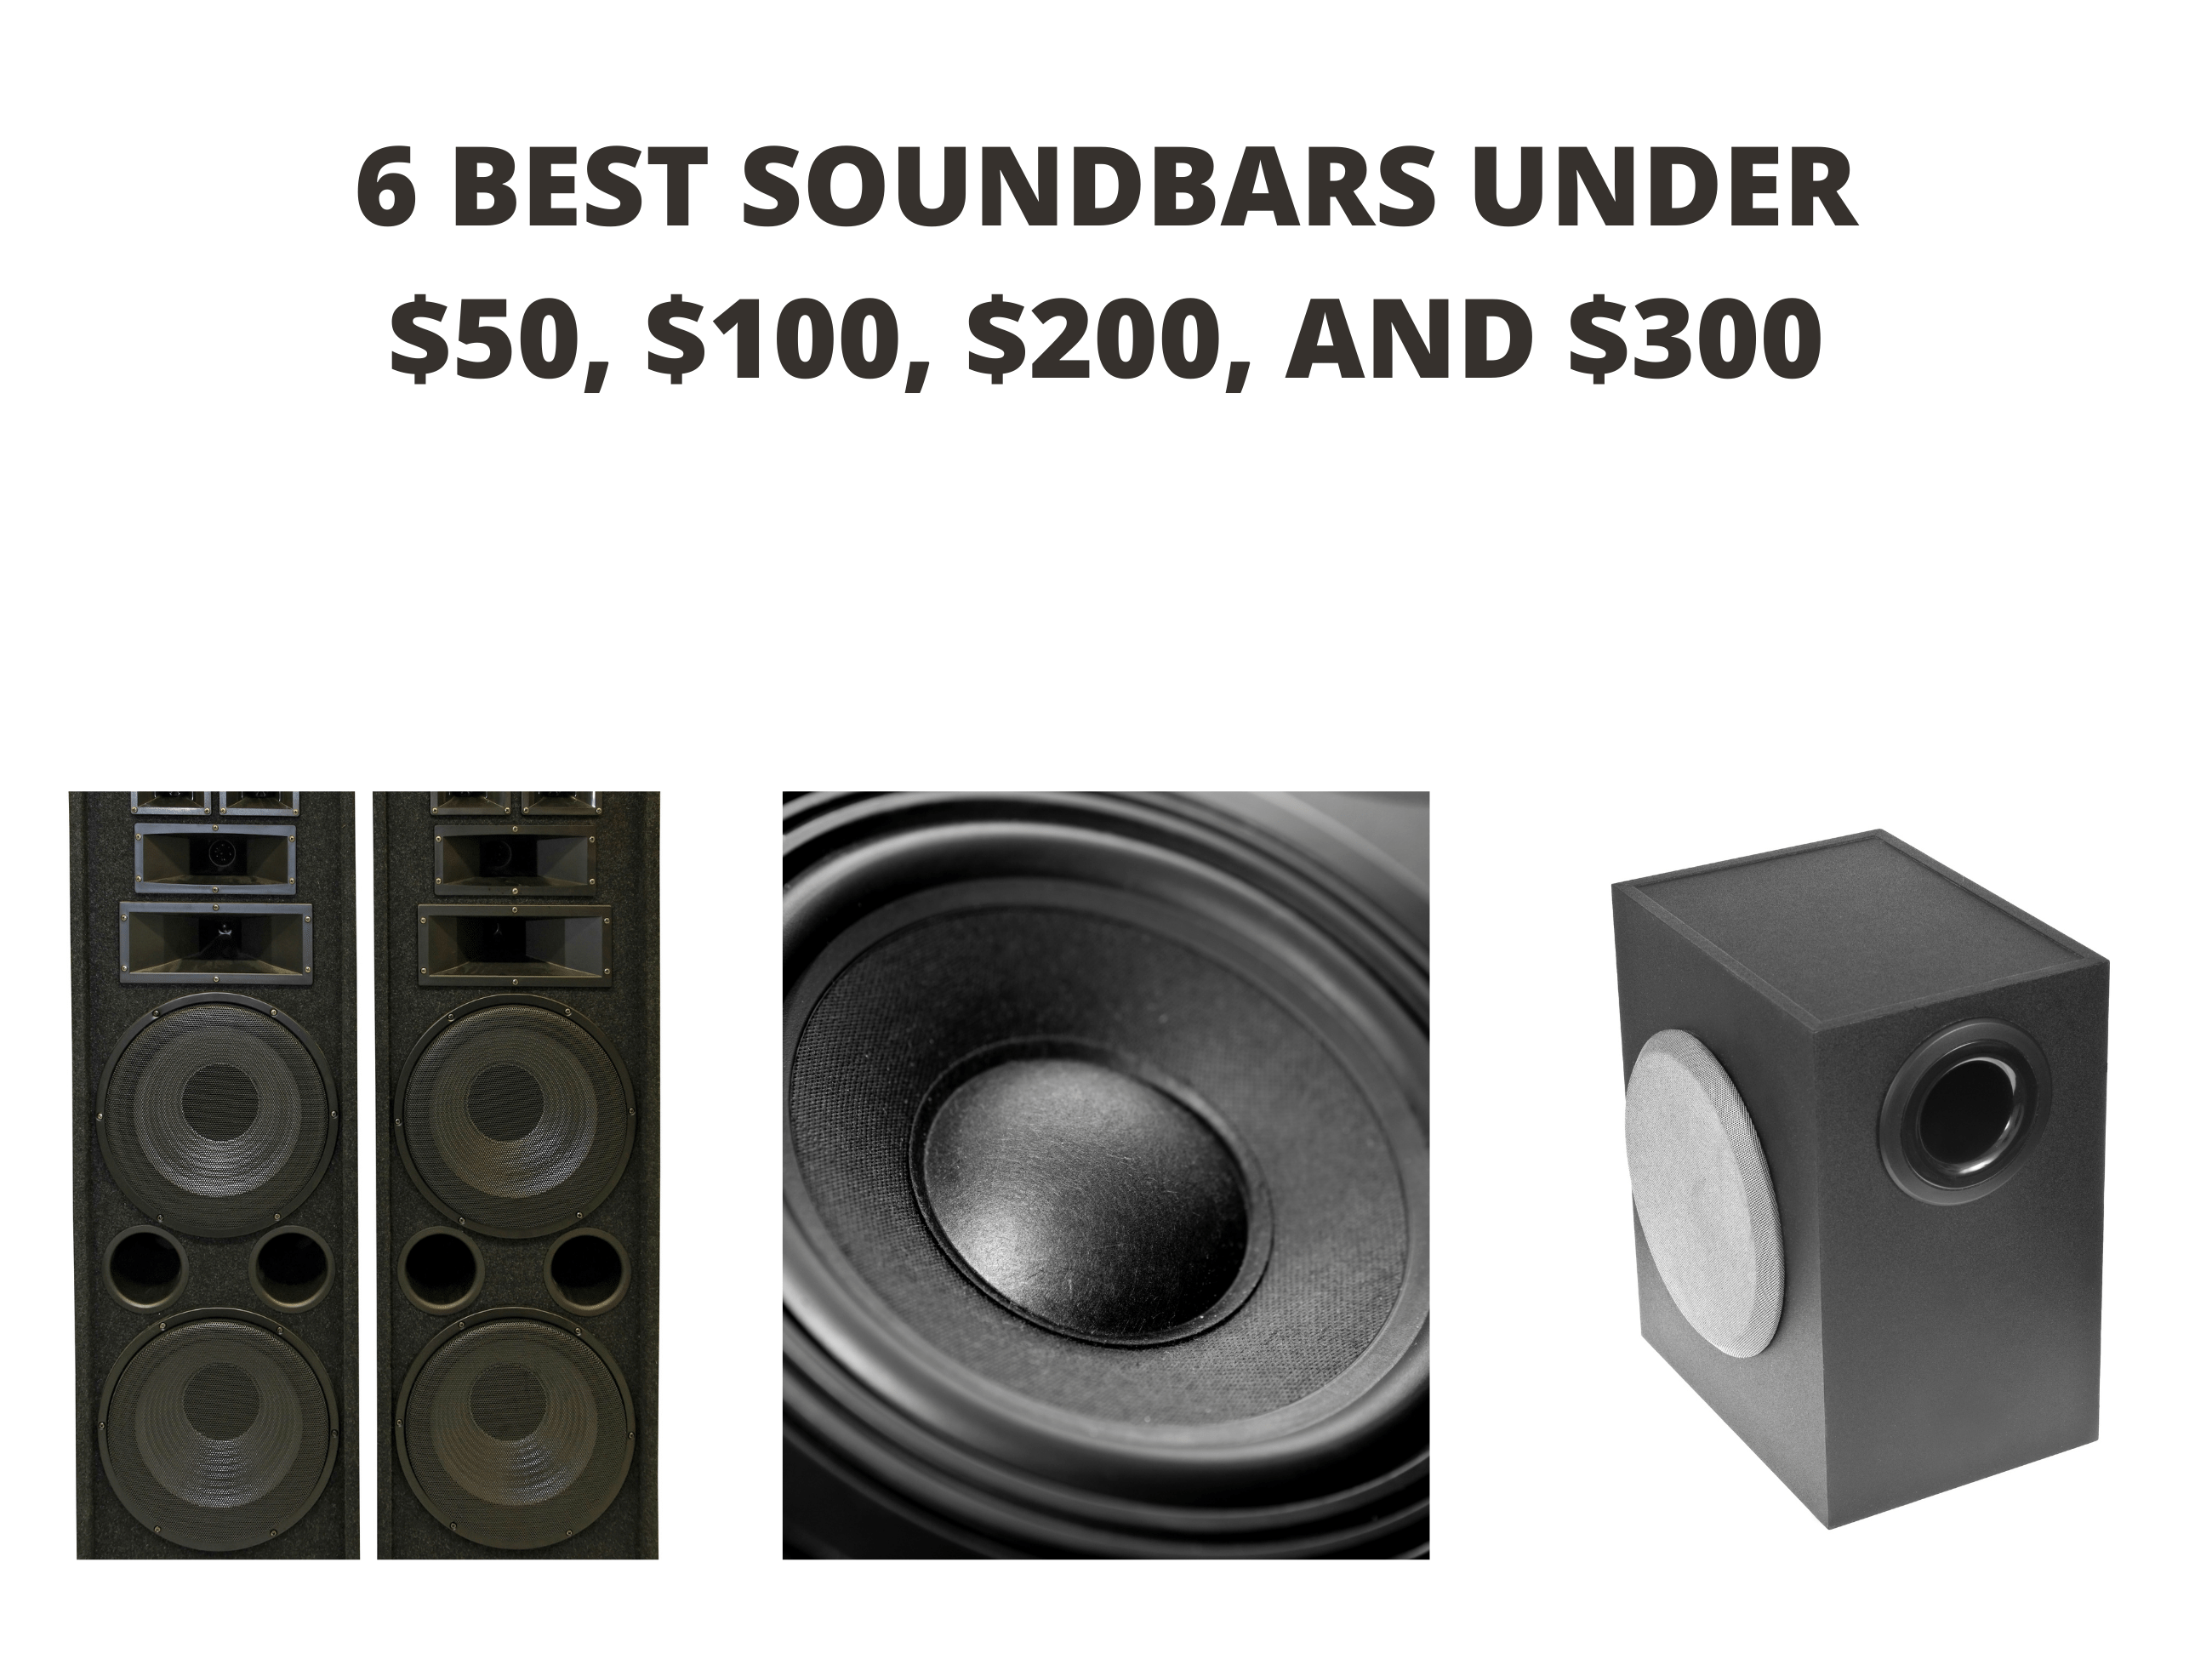 6 Best Soundbars under $50, $100, $200, and $300 (2022 Reviews)